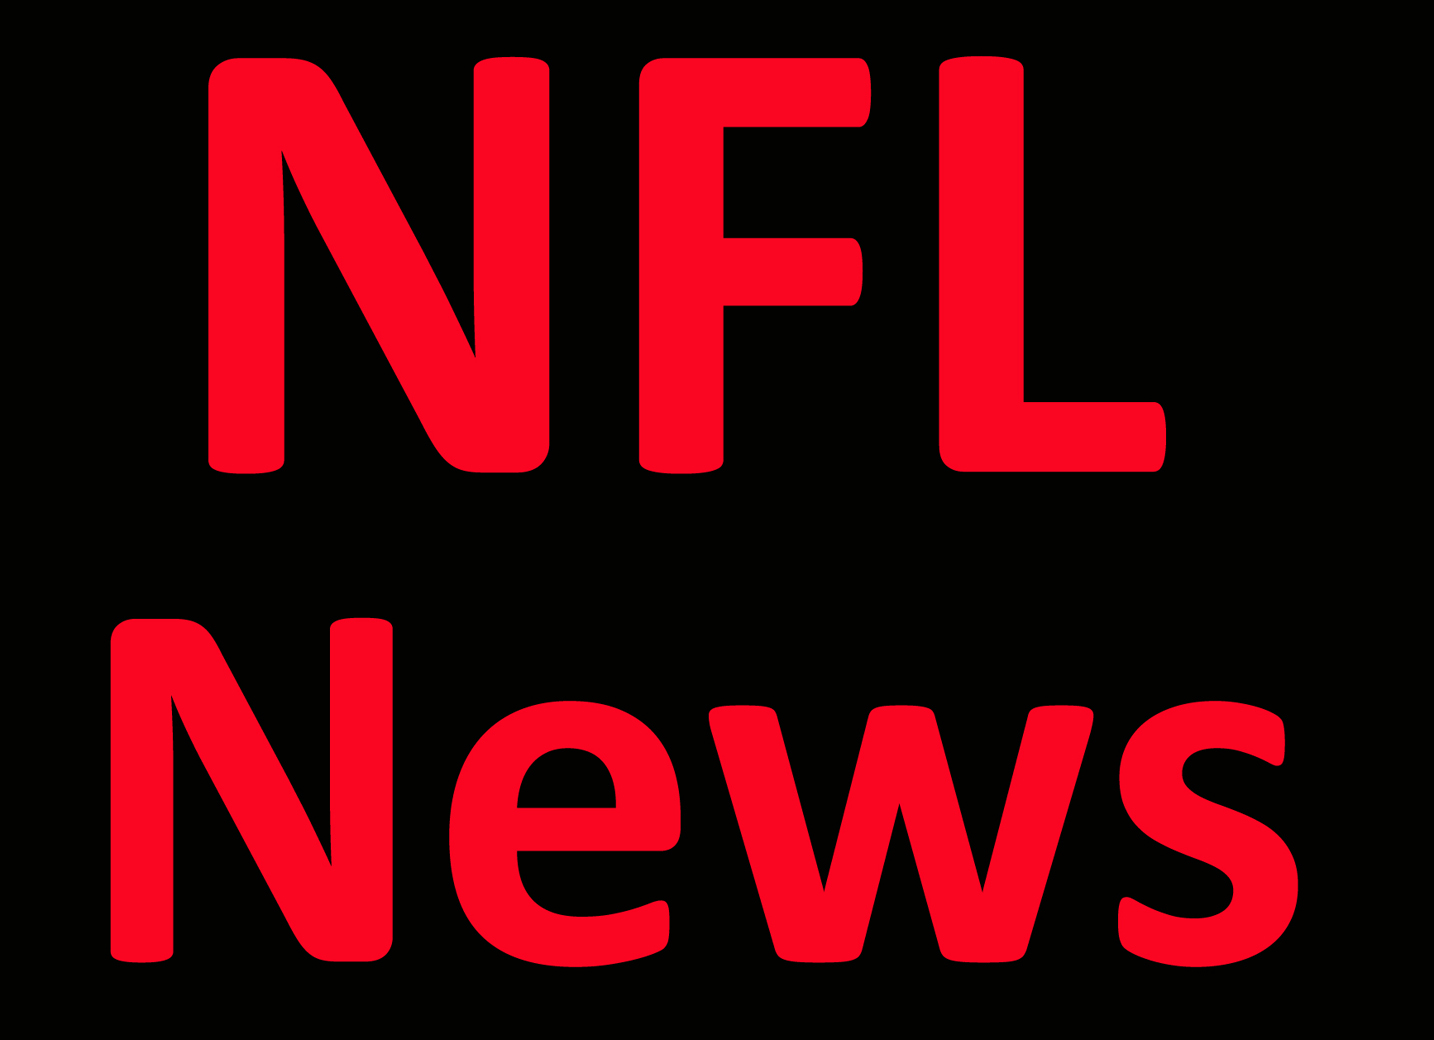 NFL News: Bills OC Dorsey says he’ll learn from meltdown Per Report